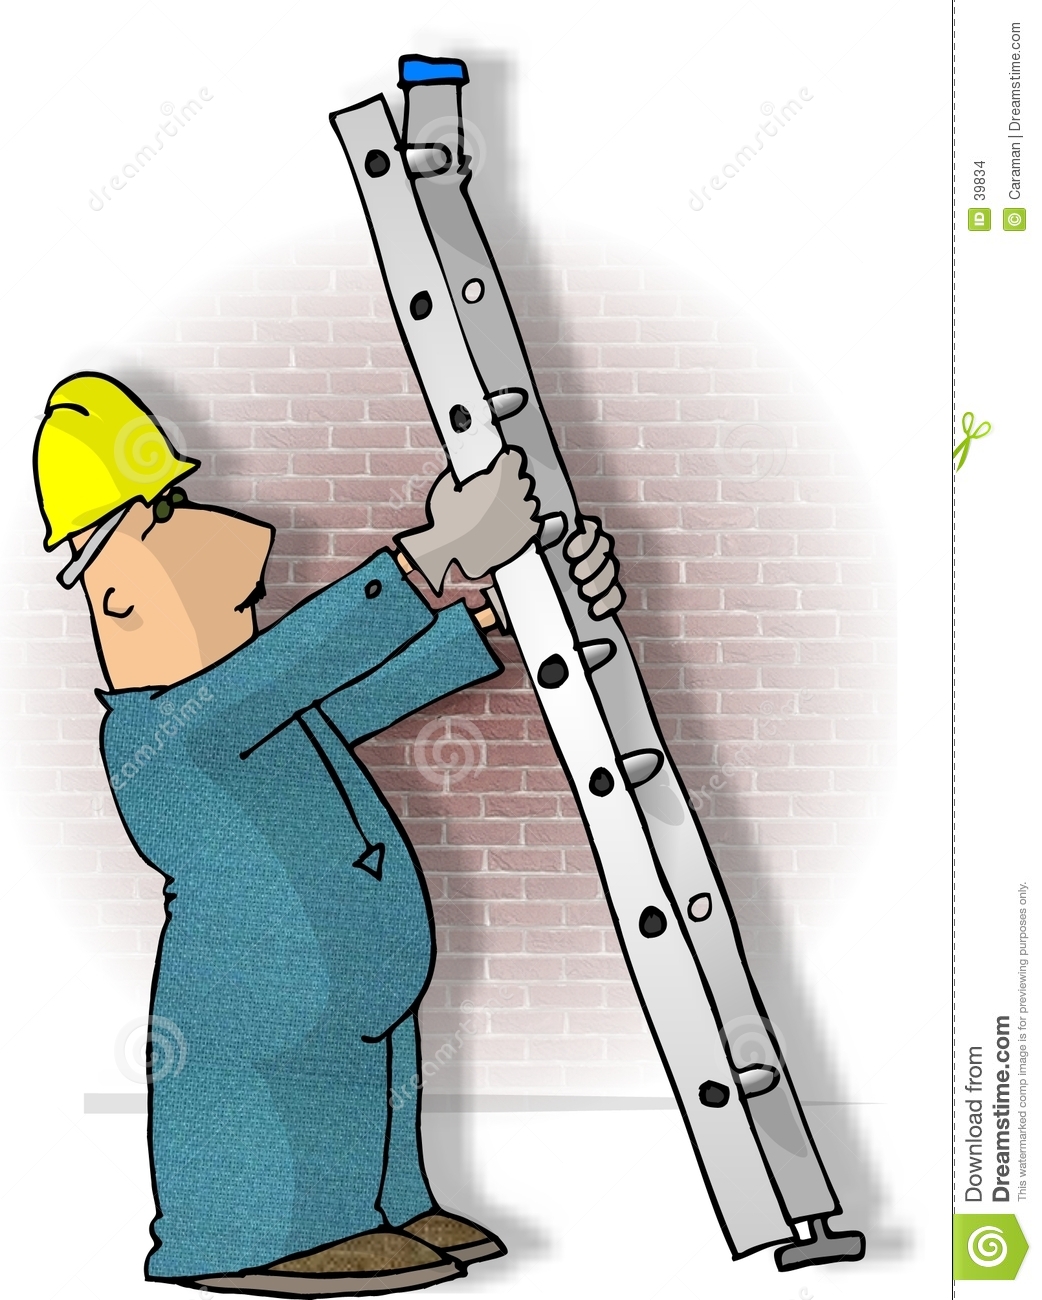 Ladder Safety Stock Images   Image  39834